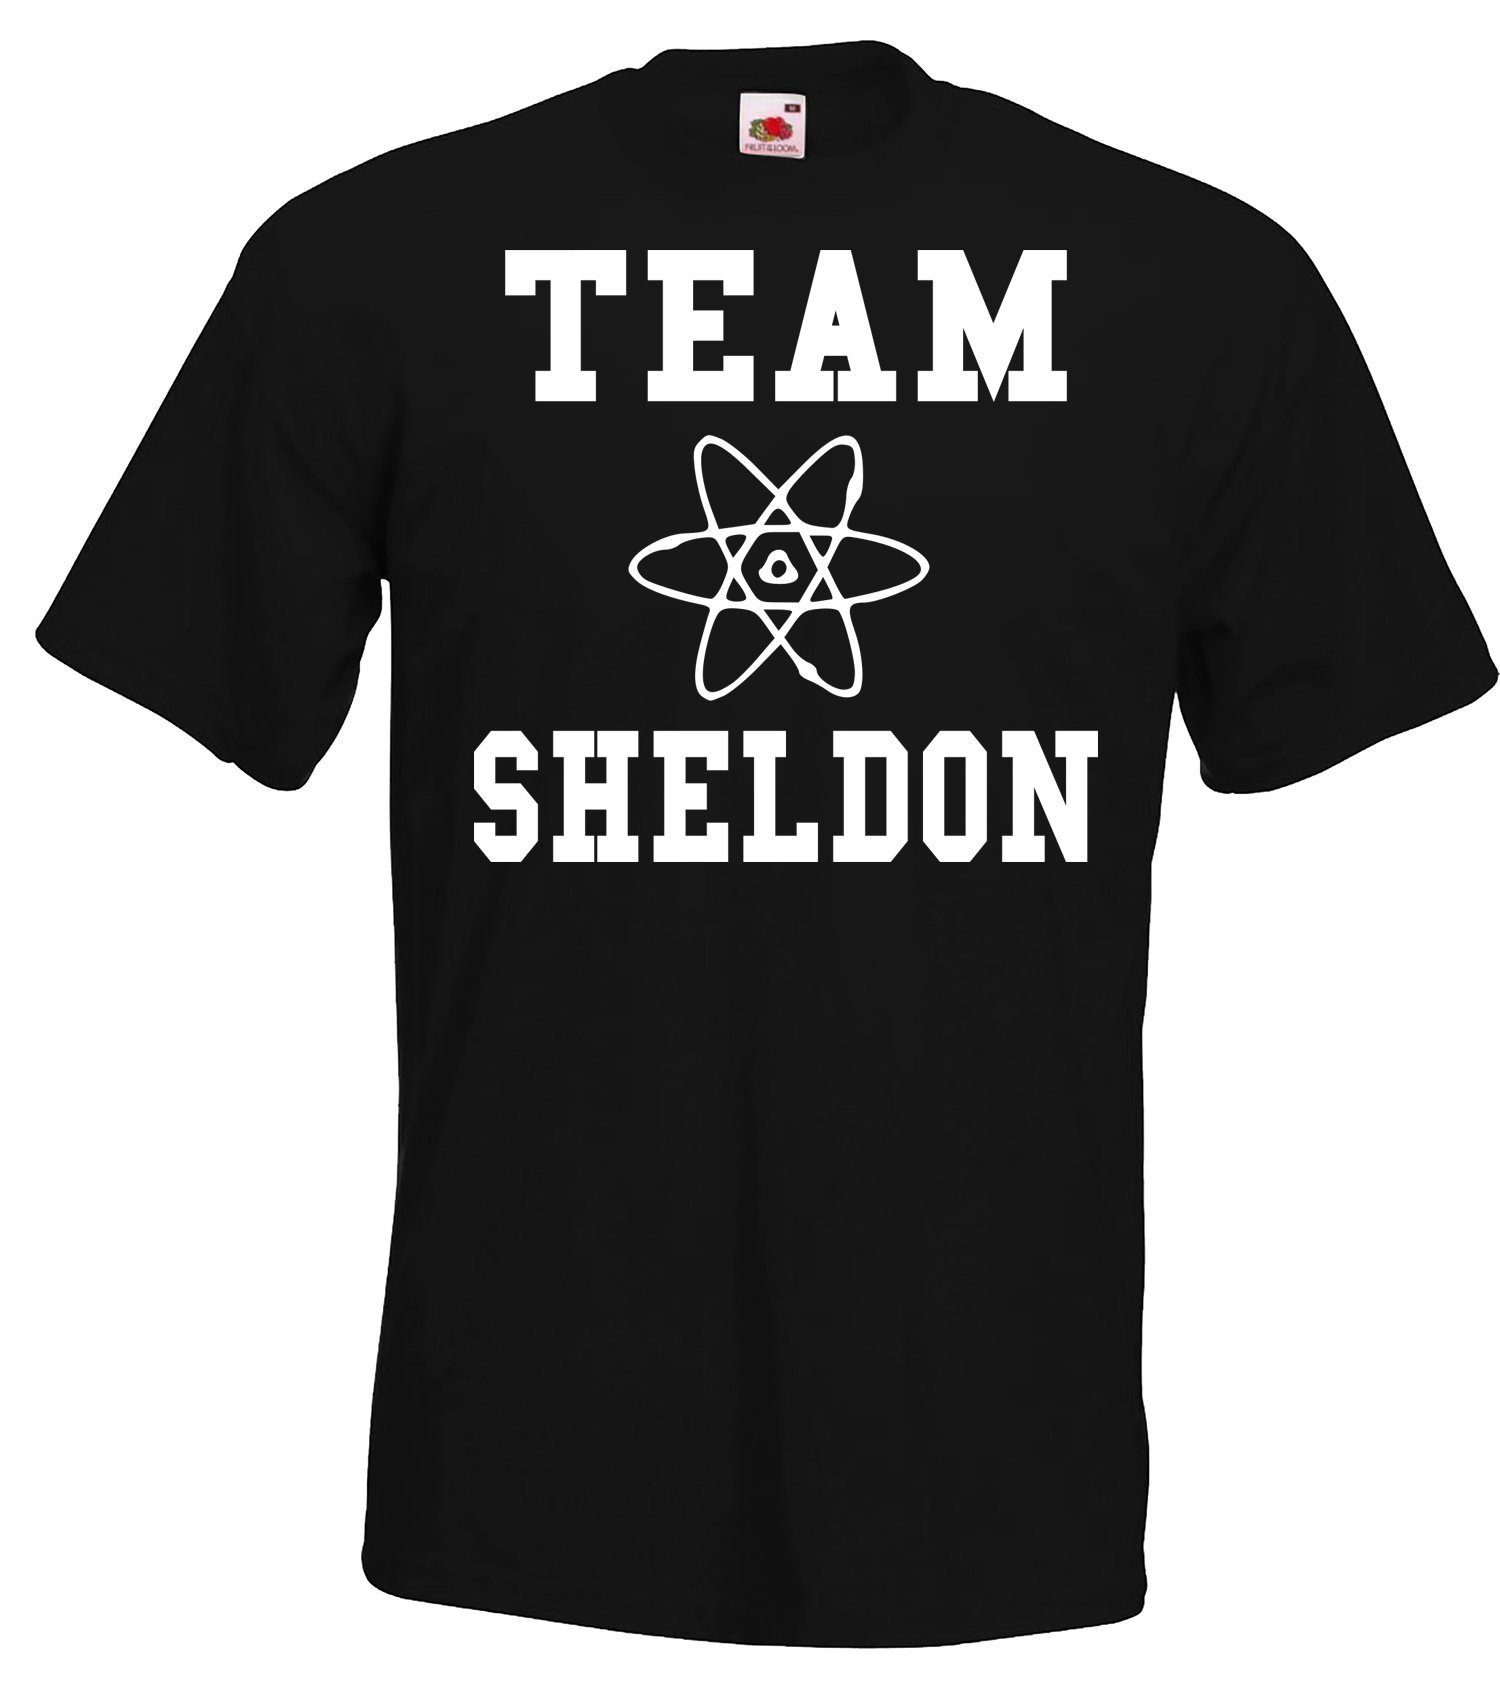 Sheldon T-Shirt Motiv trendigem Schwarz Team mit Herren Designz T-Shirt Youth